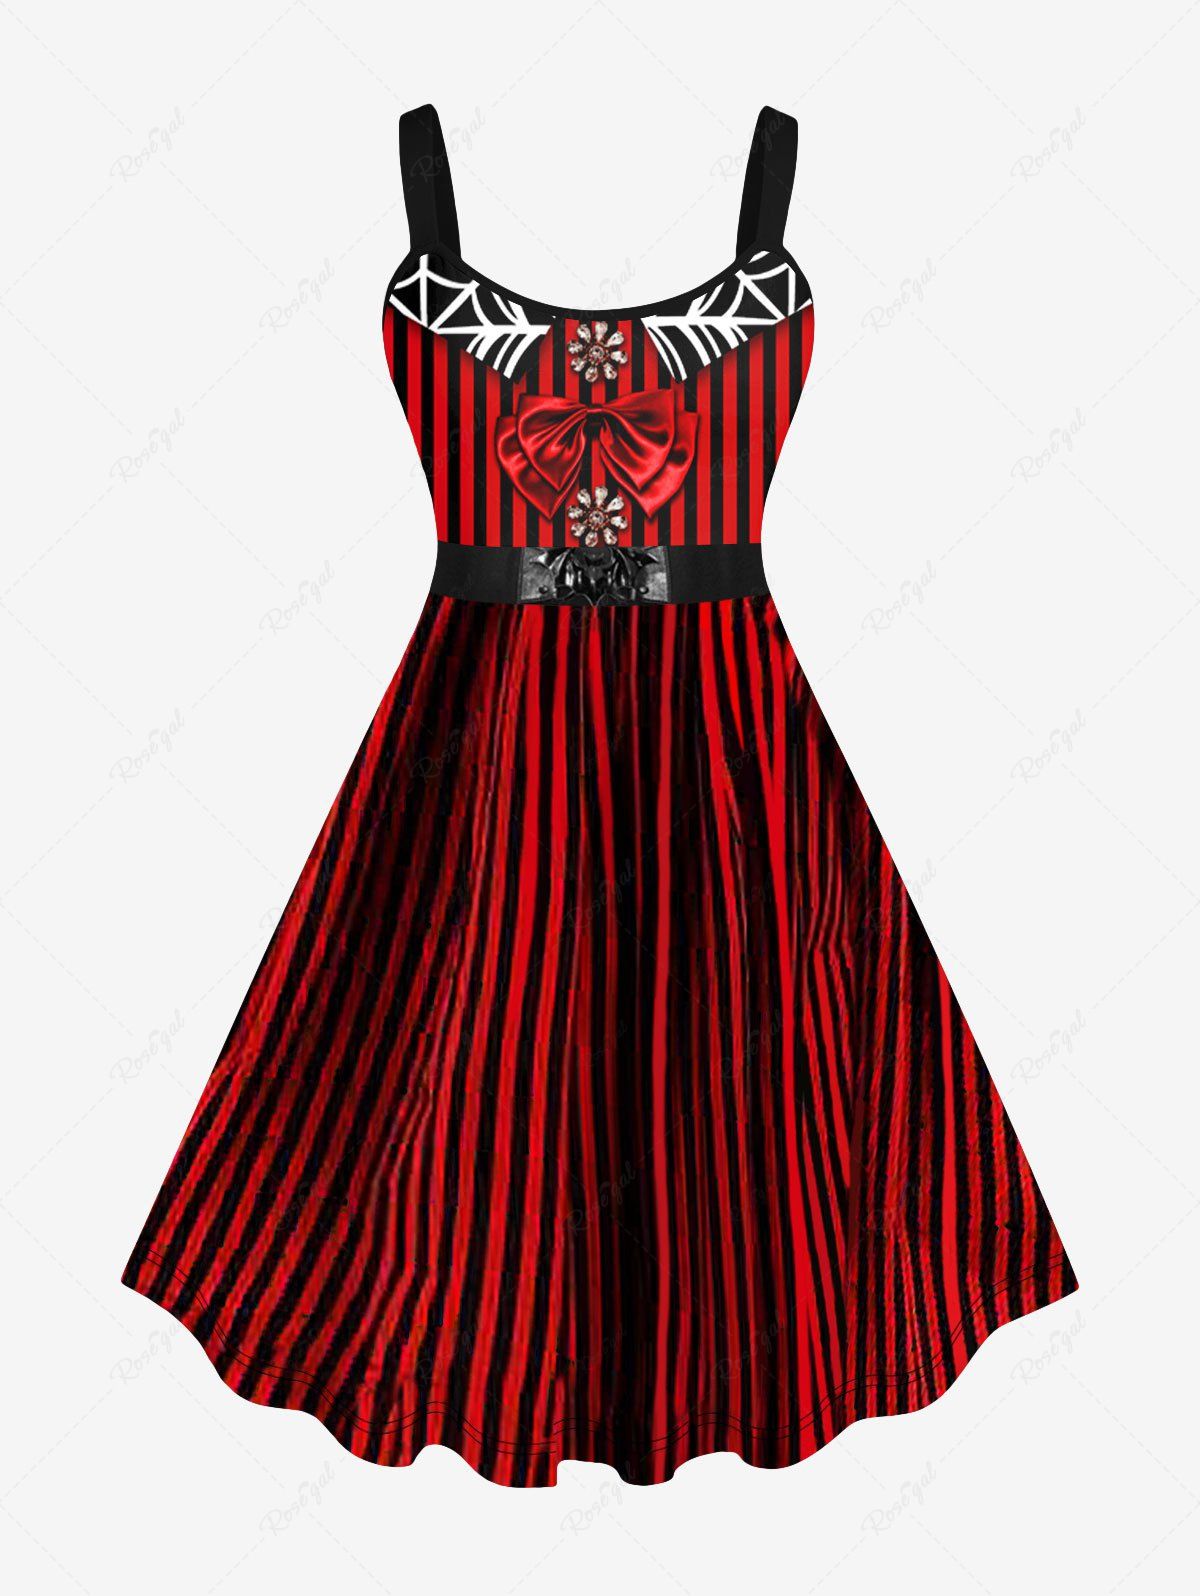 Affordable Plus Size 3D Bowknot Striped Bat Belt Spider Web Print Halloween Tank Dress  